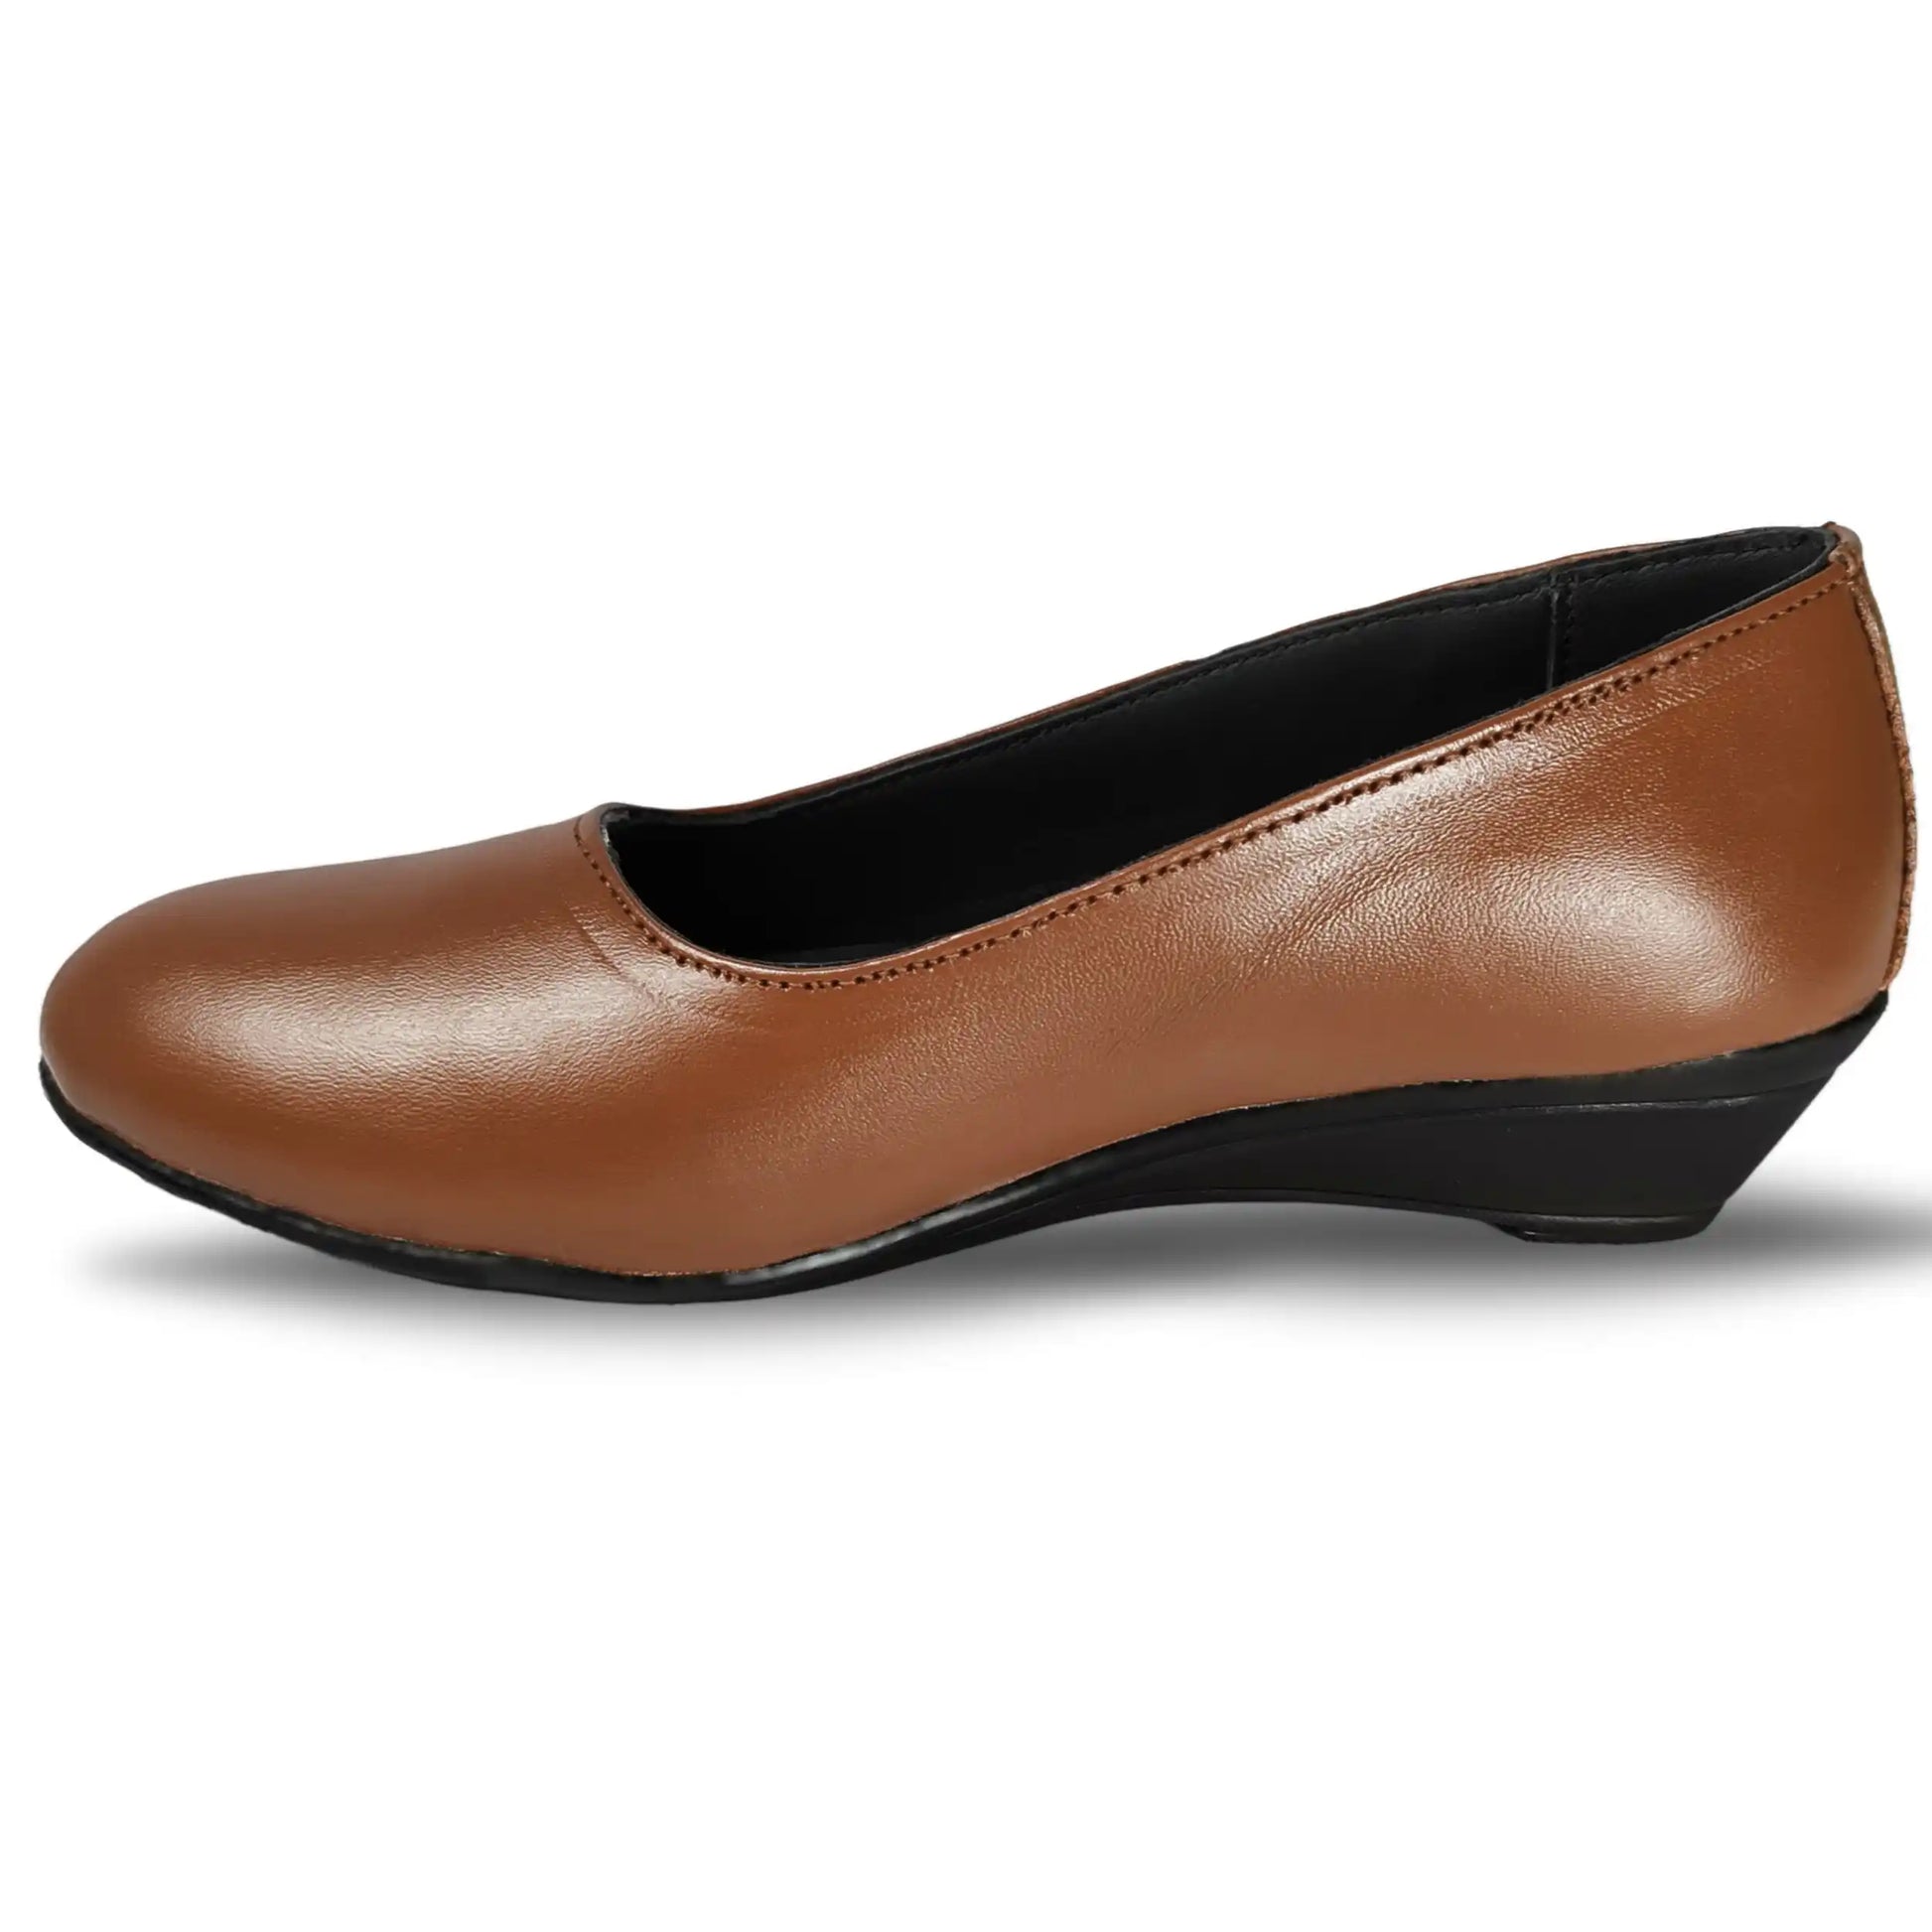 brown ballerina shoes